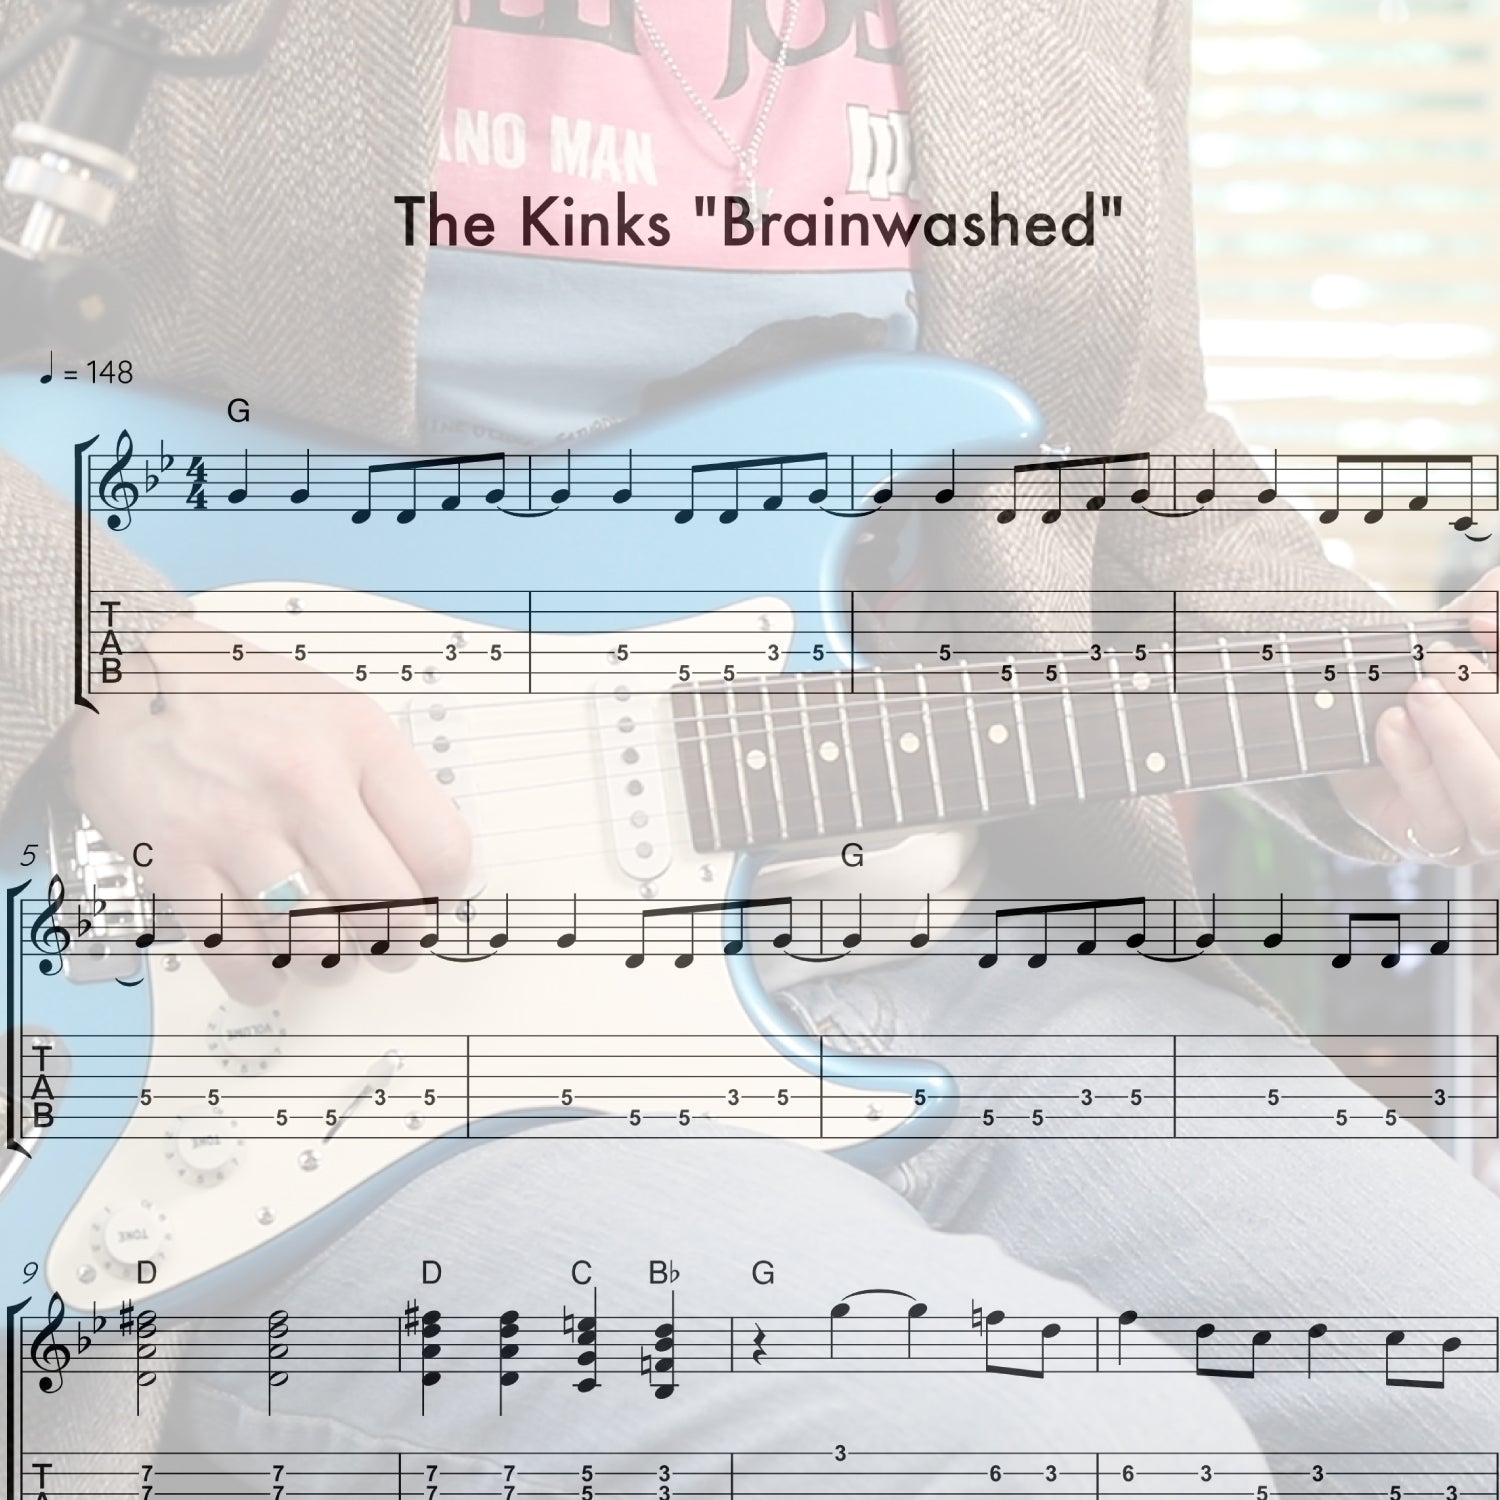 The Kinks "Brainwashed"